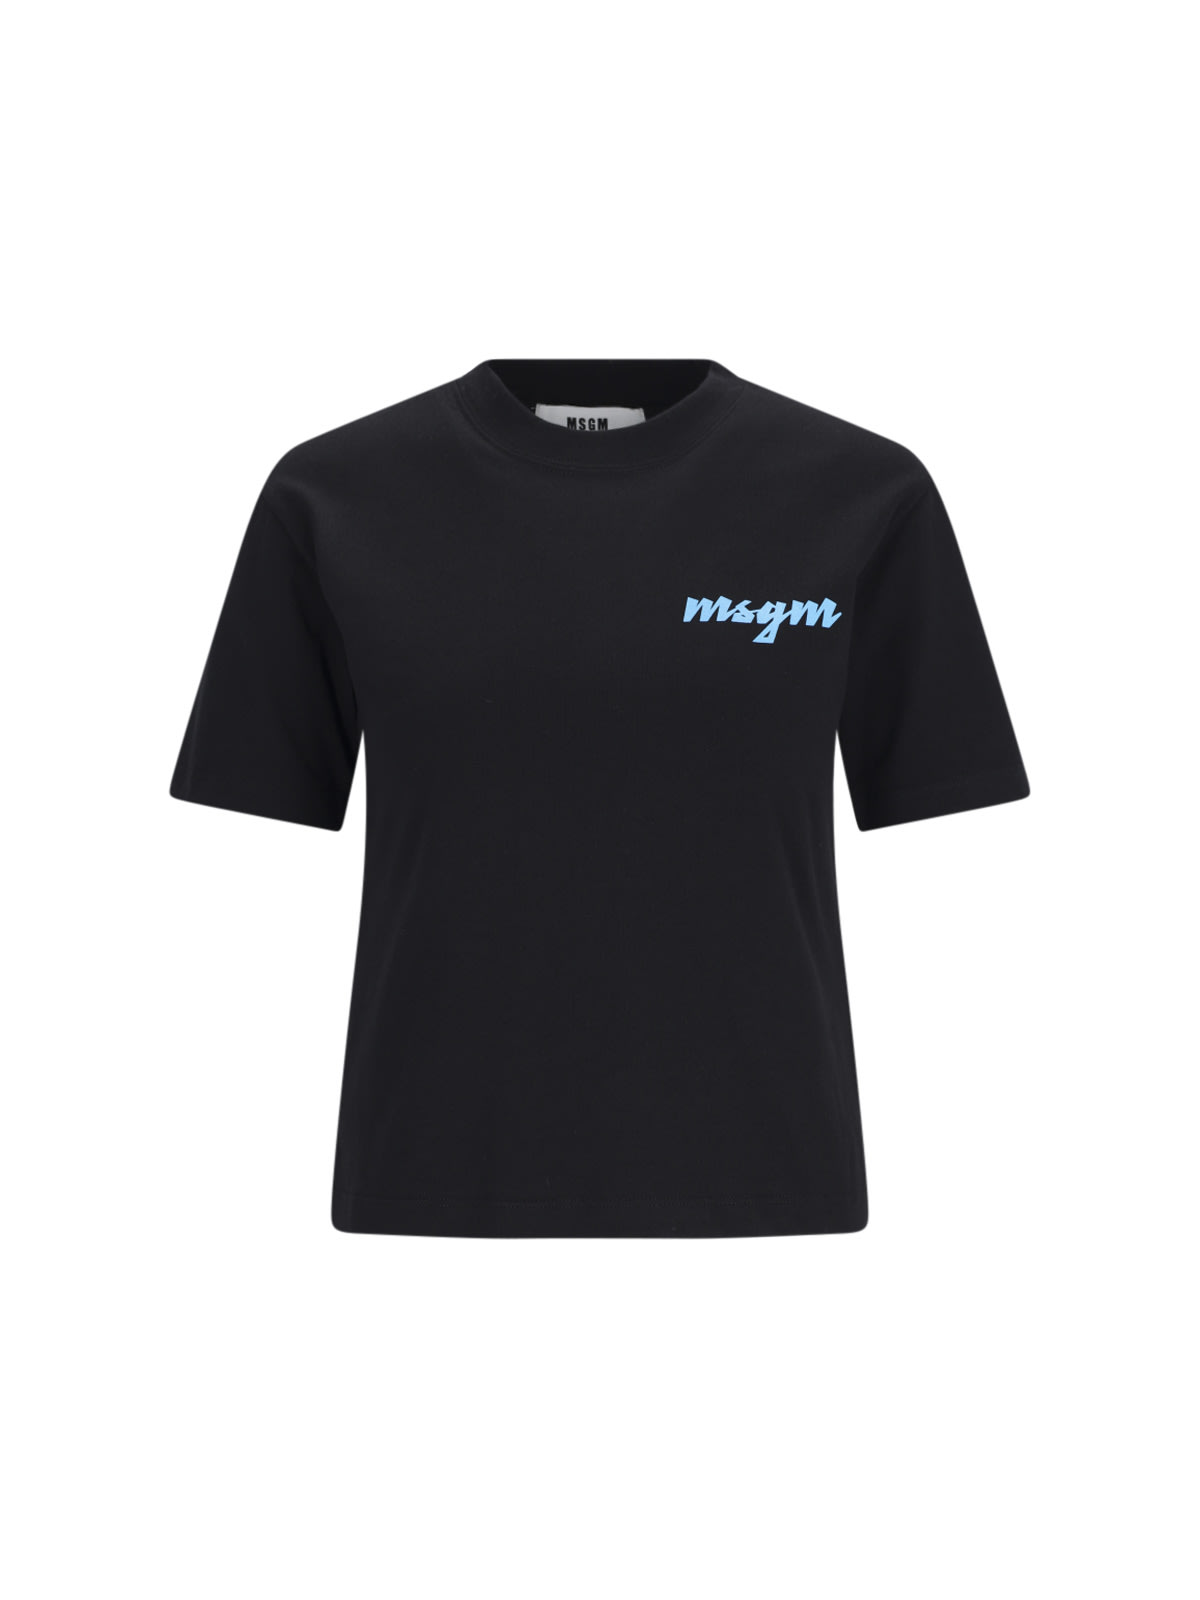 Msgm Logo T-shirt In Black